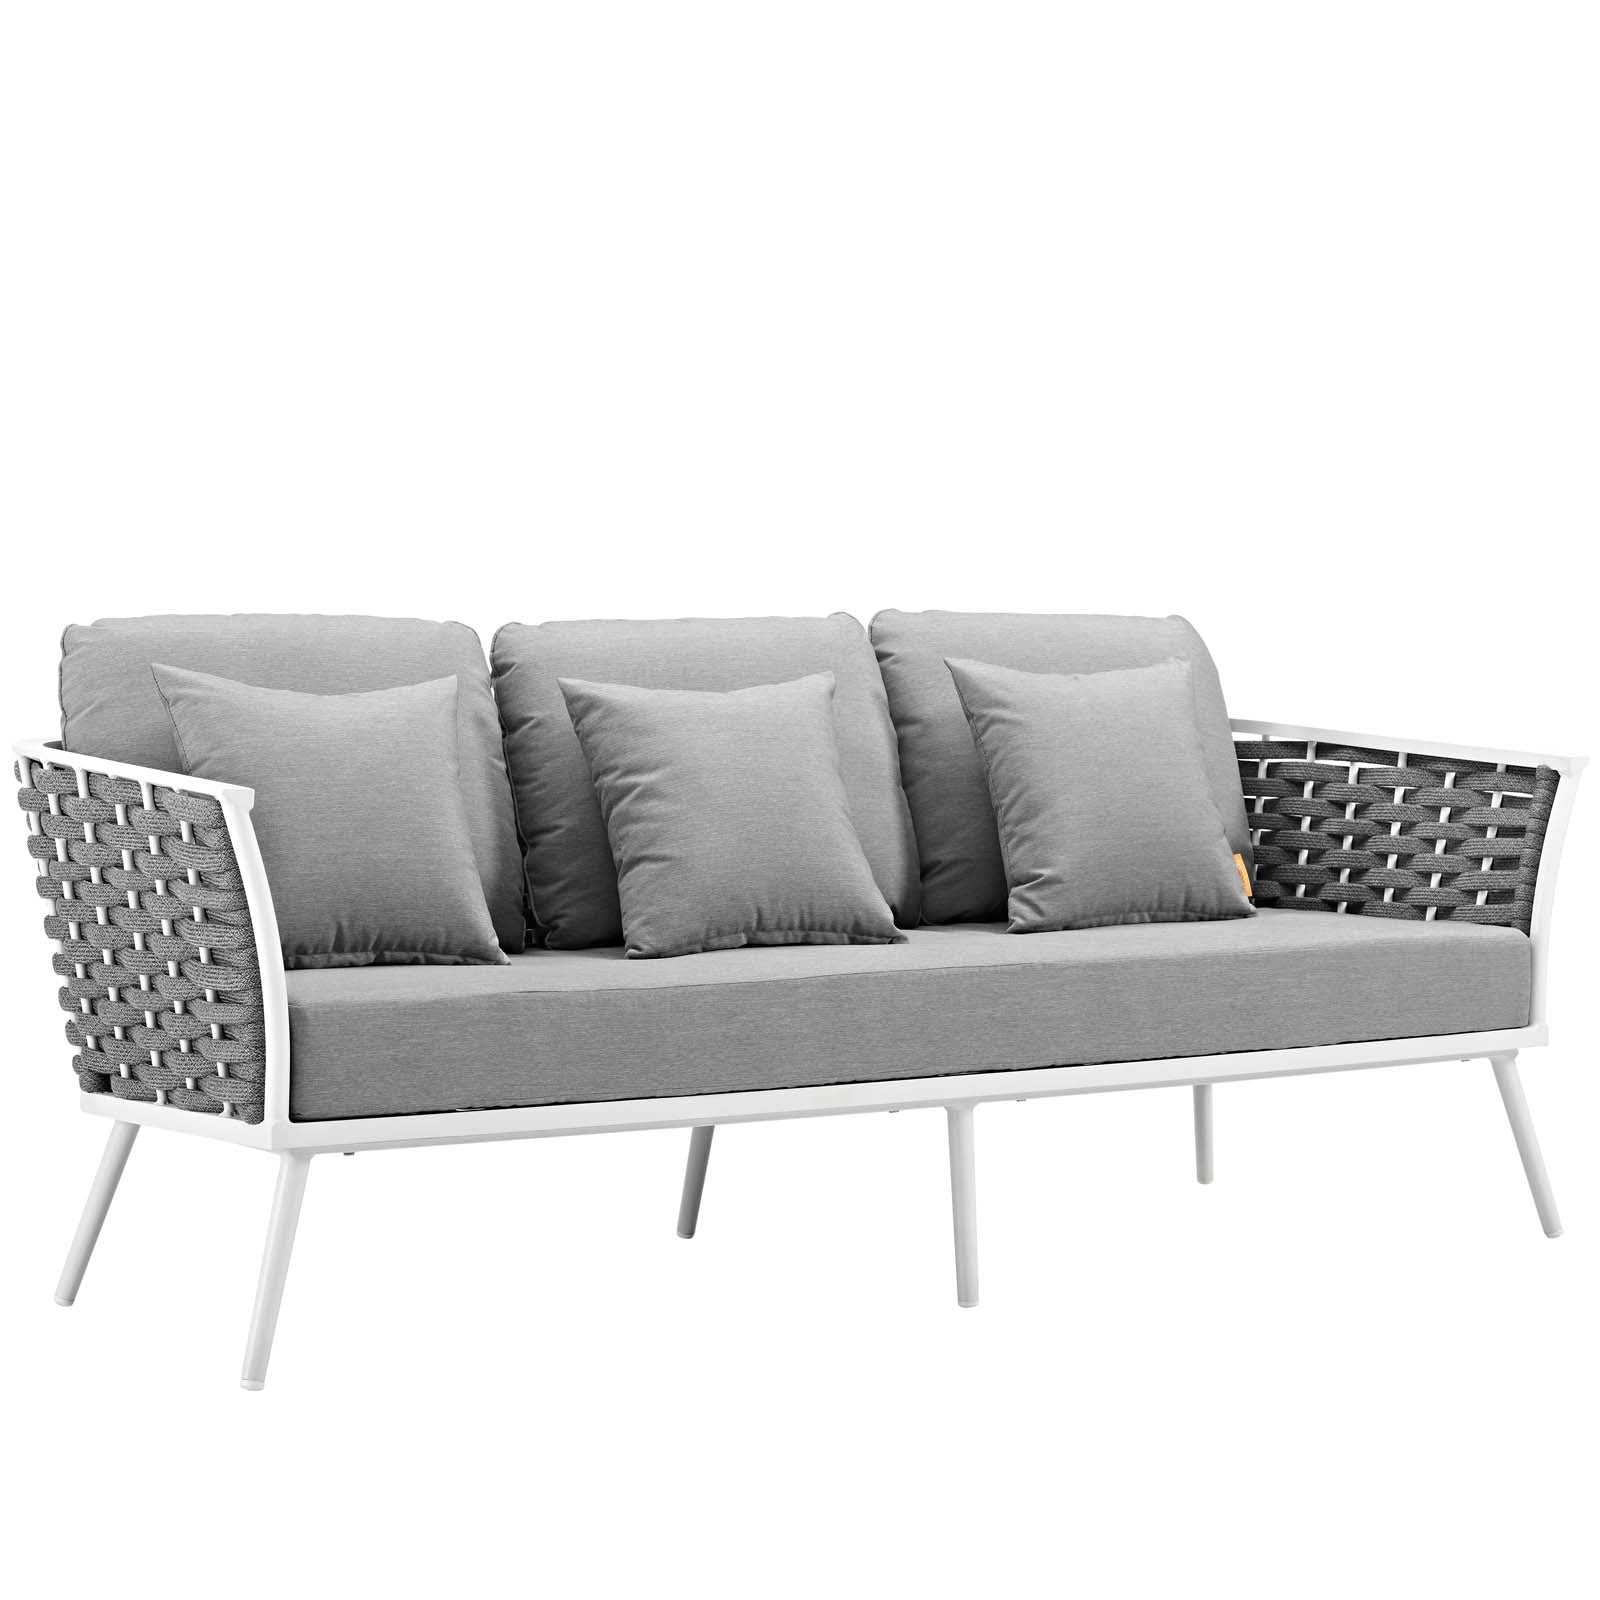 Stance 3 Piece Outdoor 107.5"W 64.5 D Patio Aluminum Sectional Sofa Set White